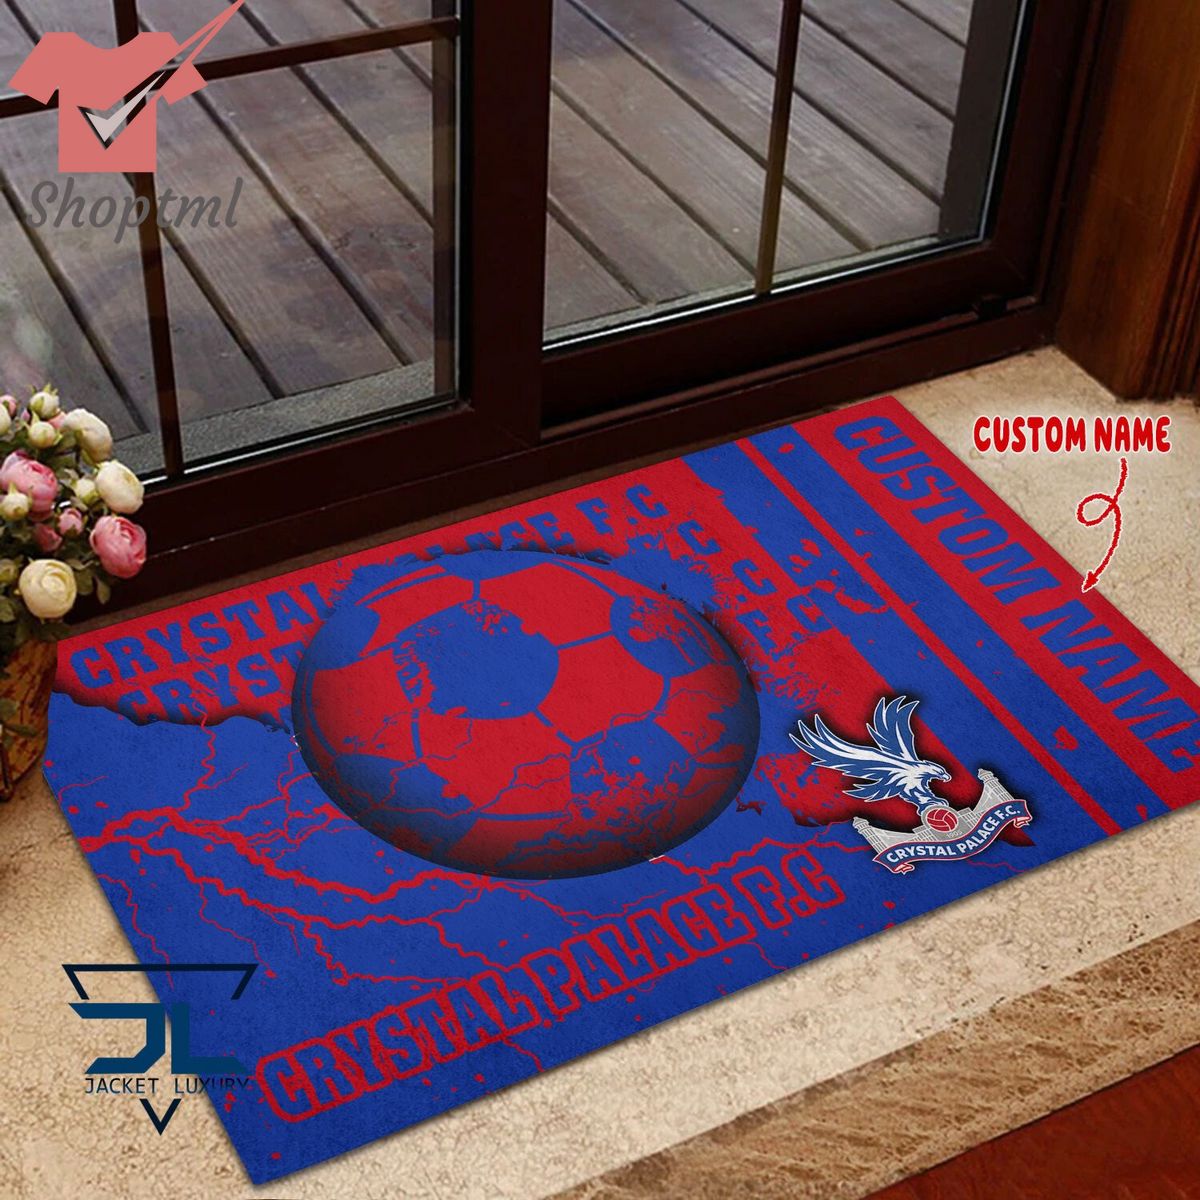 Crystal Palace F.C Custom Name Doormat